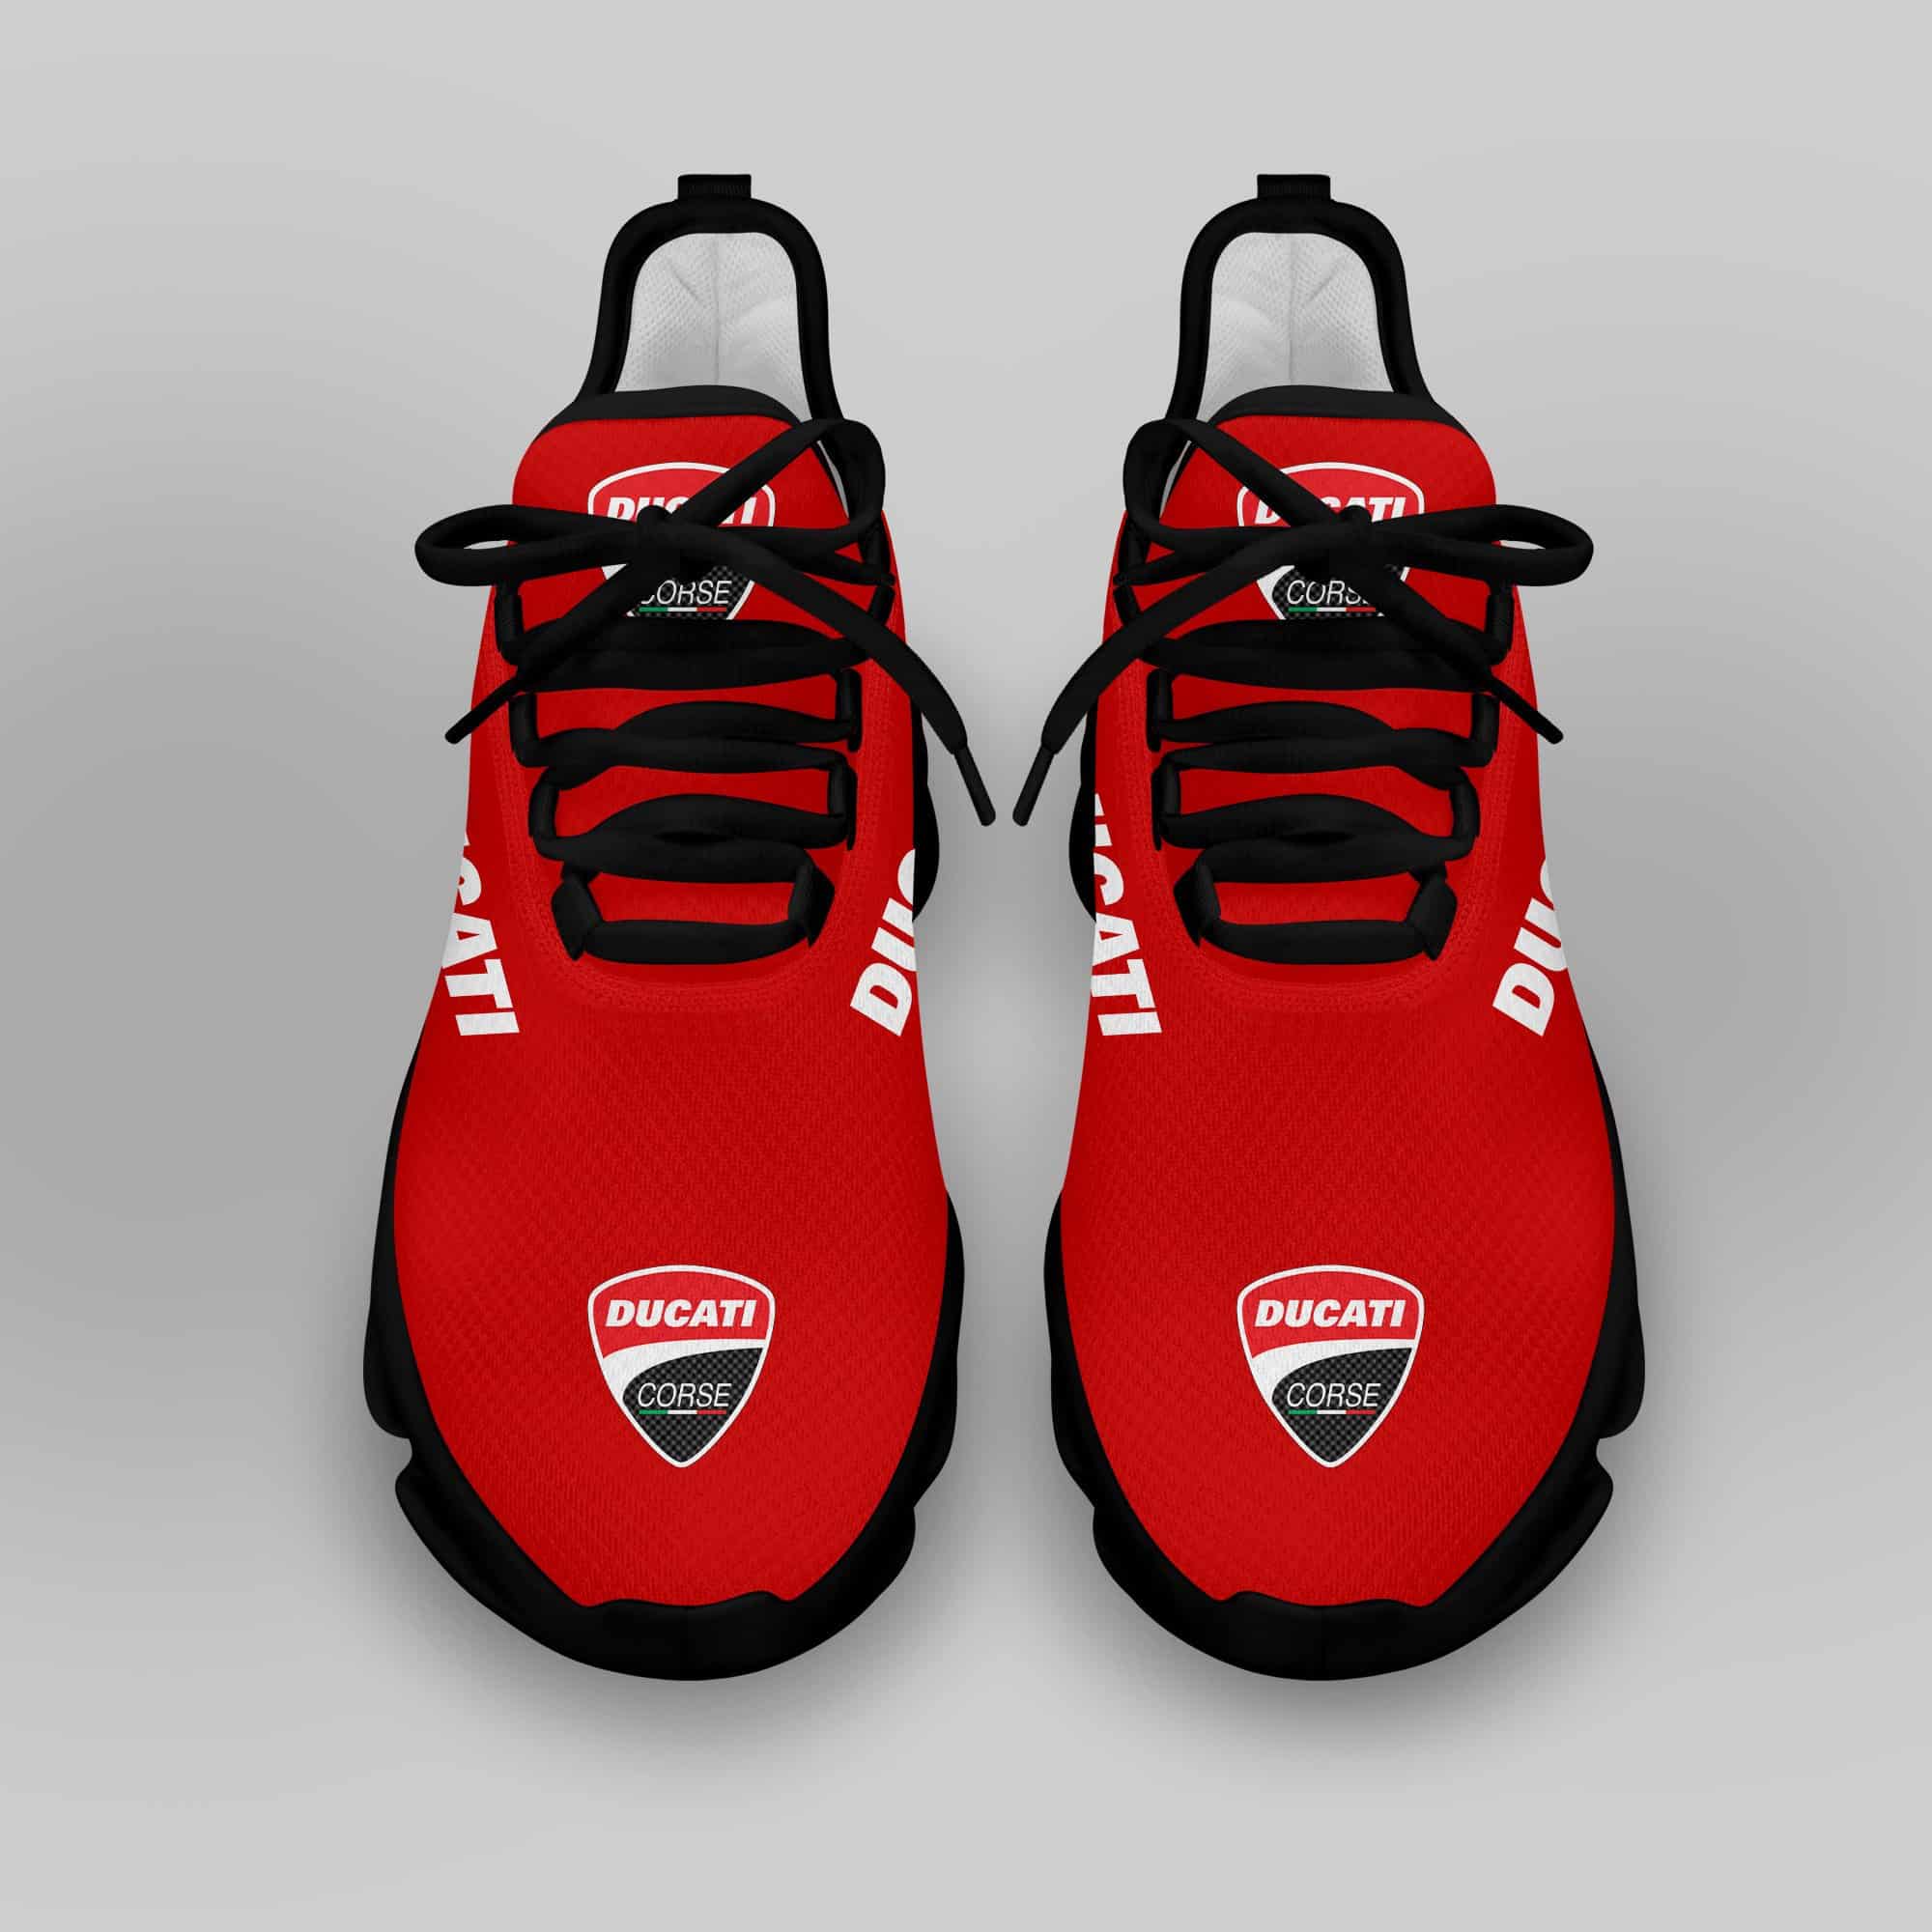 Ducati Racing Running Shoes Max Soul Shoes Sneakers Ver 33 4